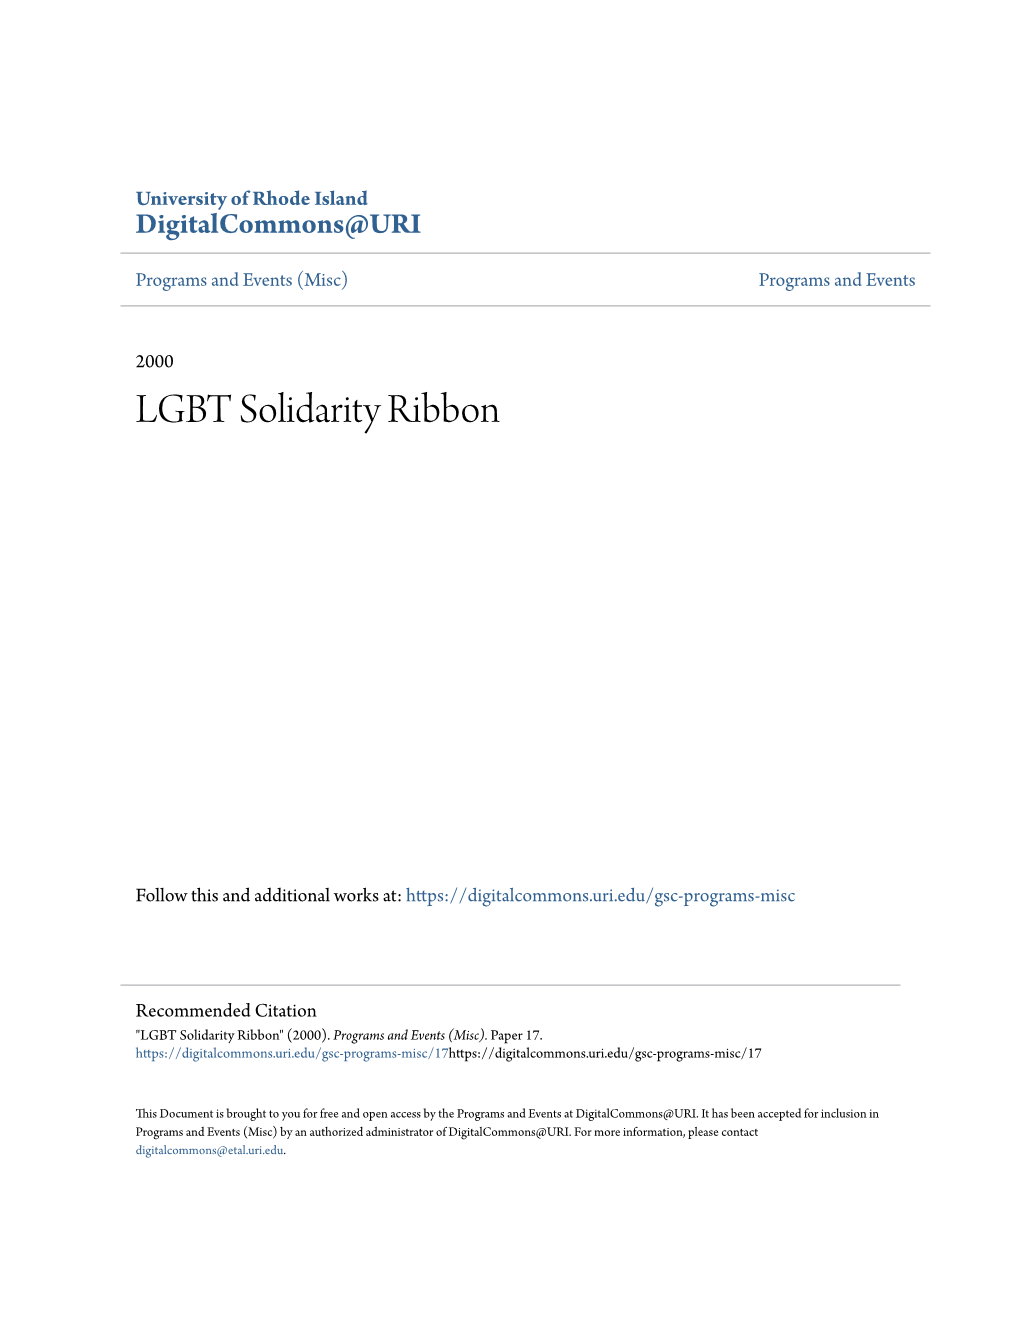 LGBT Solidarity Ribbon